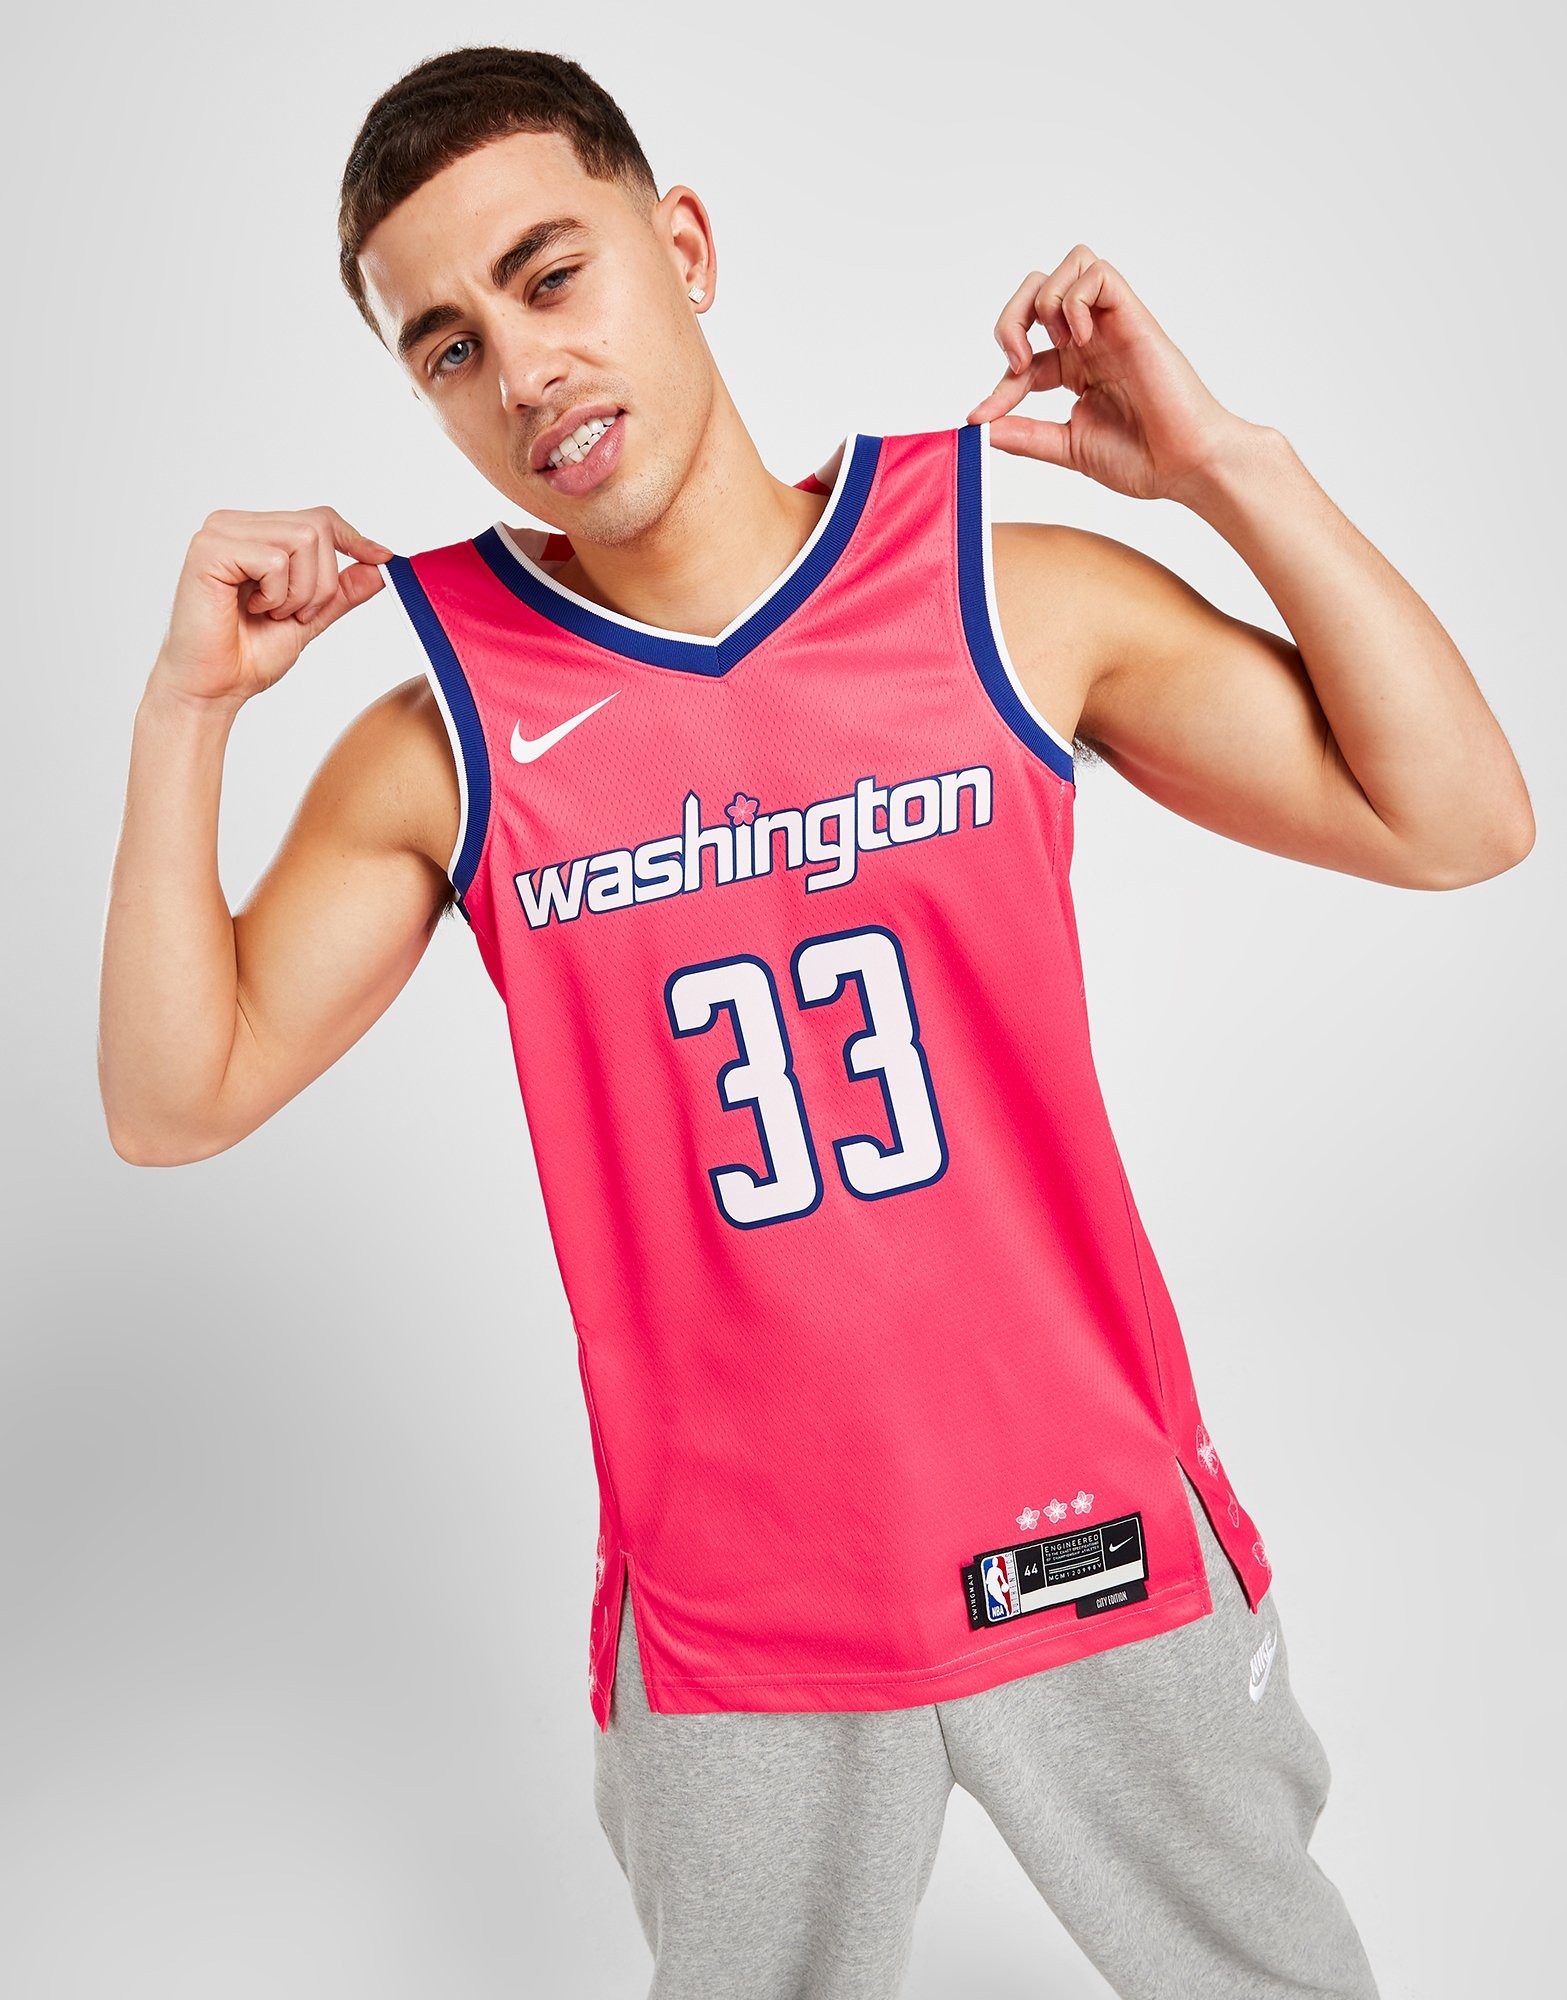 Washington Wizards Big & Tall Apparel, Wizards Plus Size Clothing